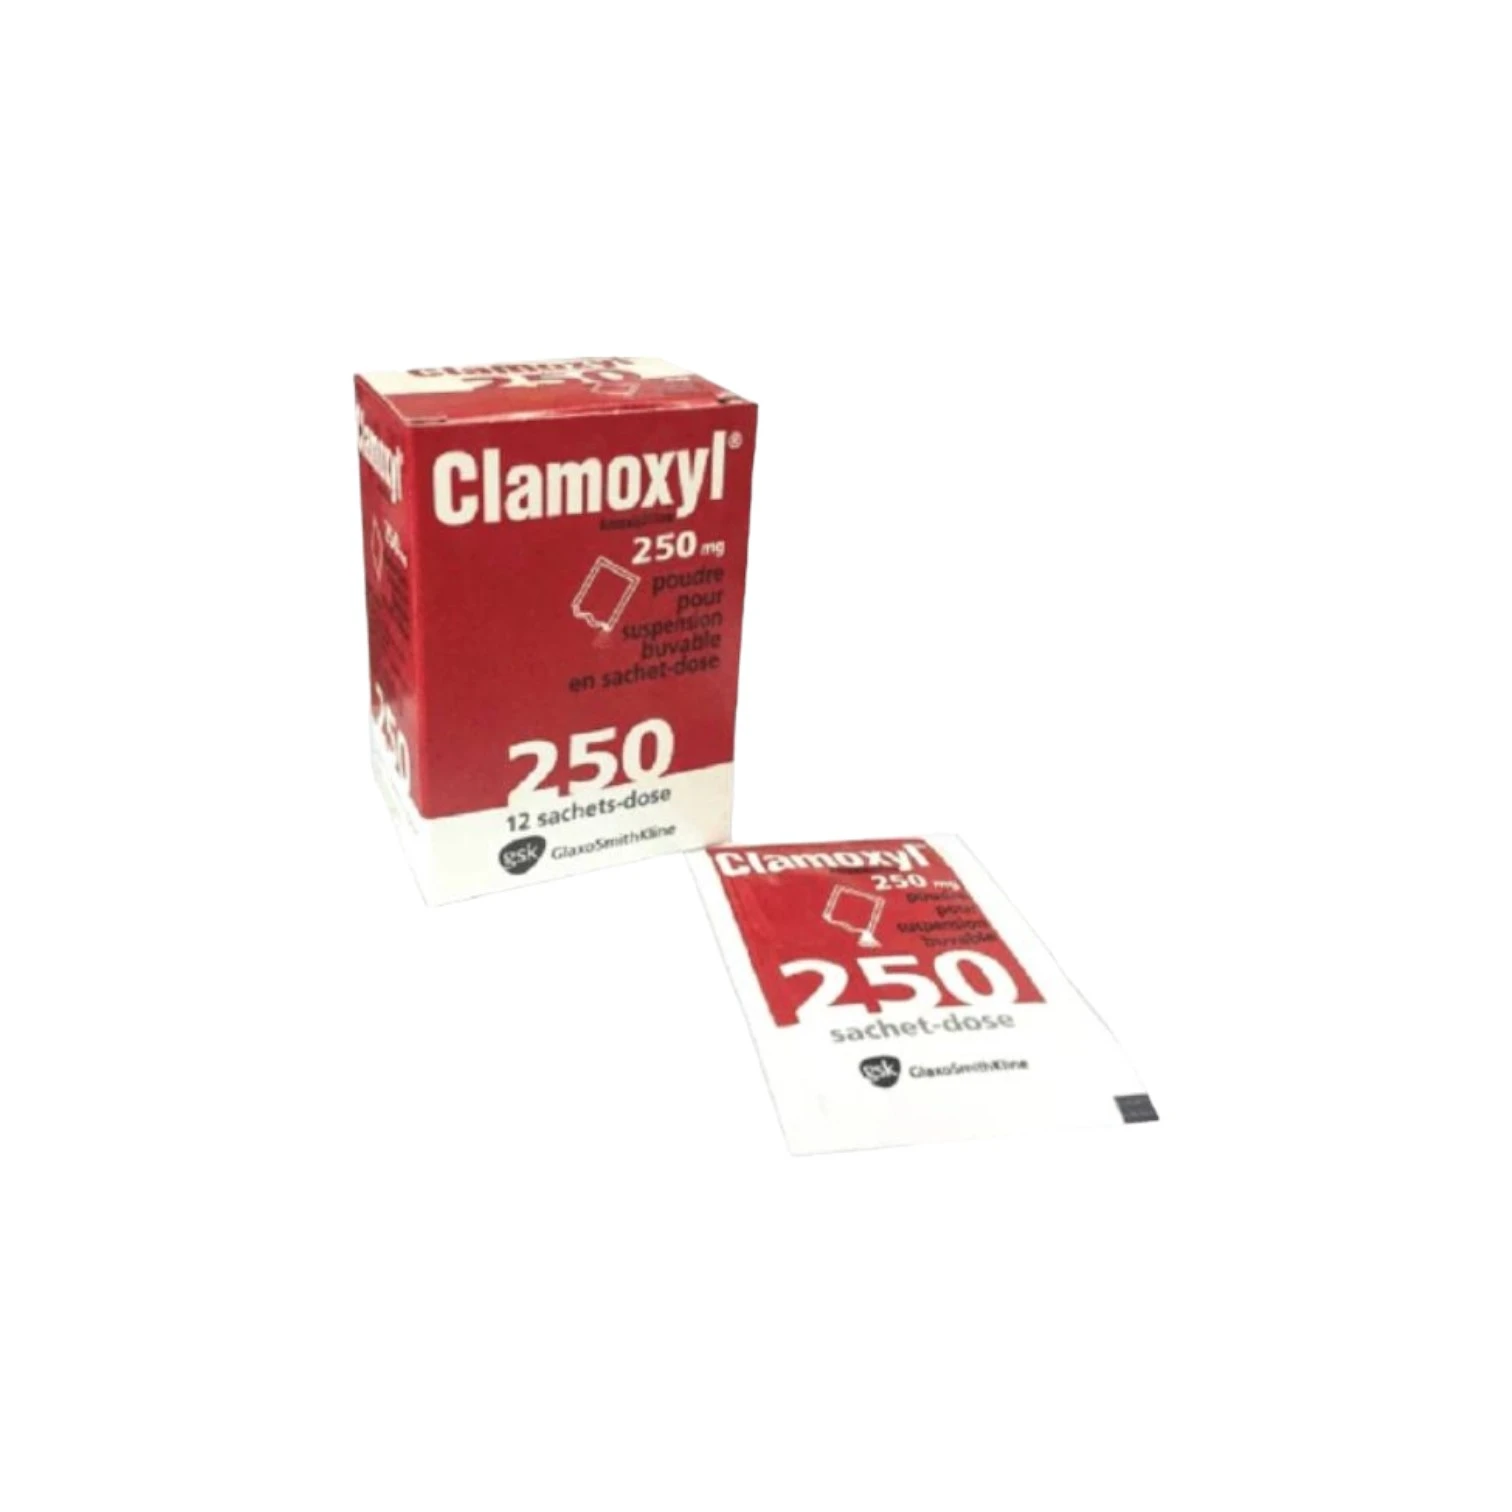 Clamoxyl 250mg 12 កញ្ចប់/ប្រអប់ 